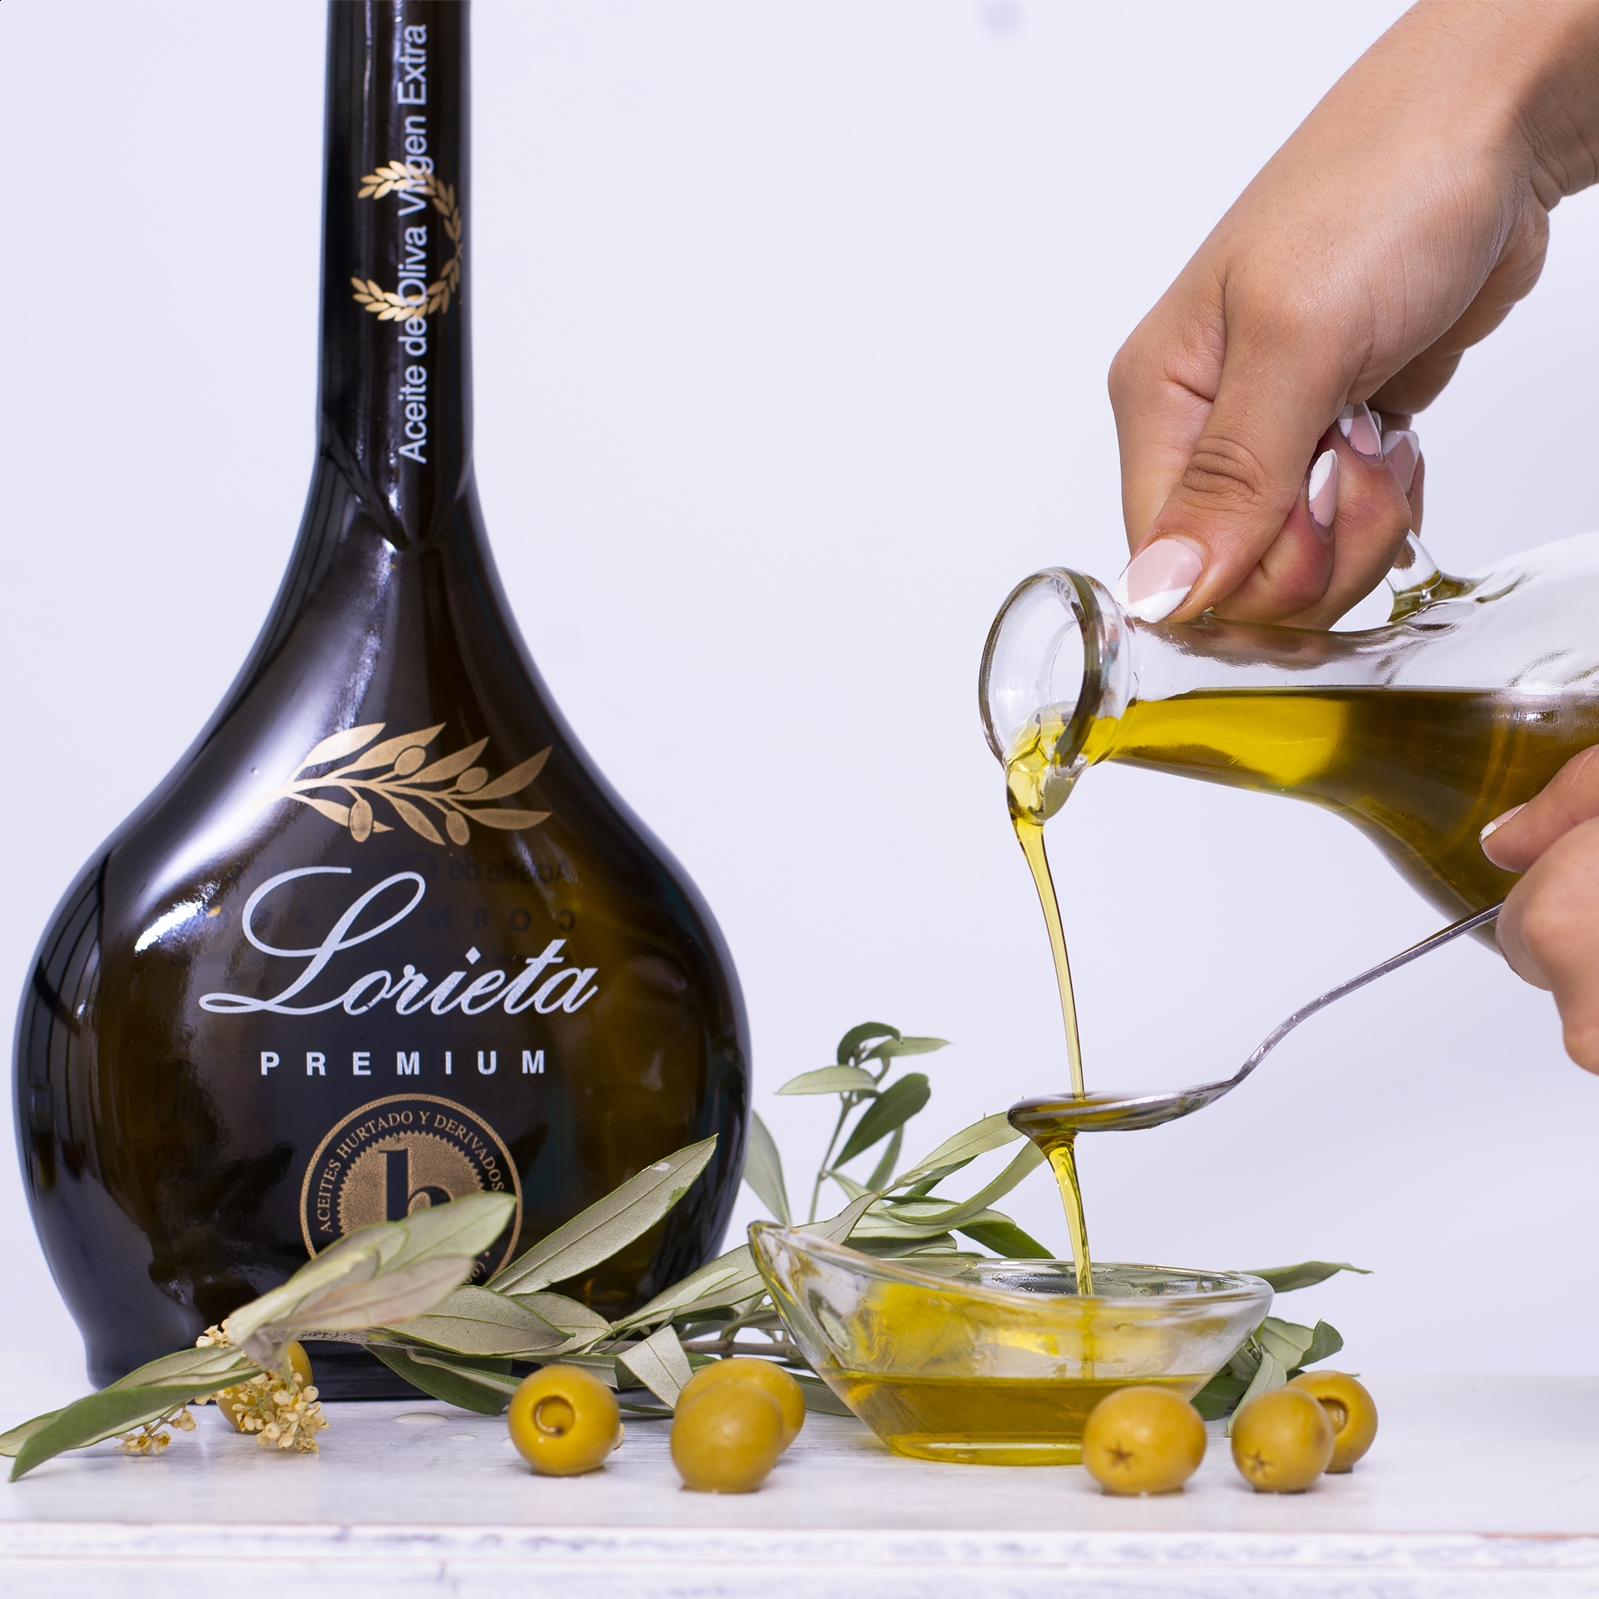 Lorieta - Aceite de oliva virgen extra Neva Premium Cornicabra 500ml, 6uds